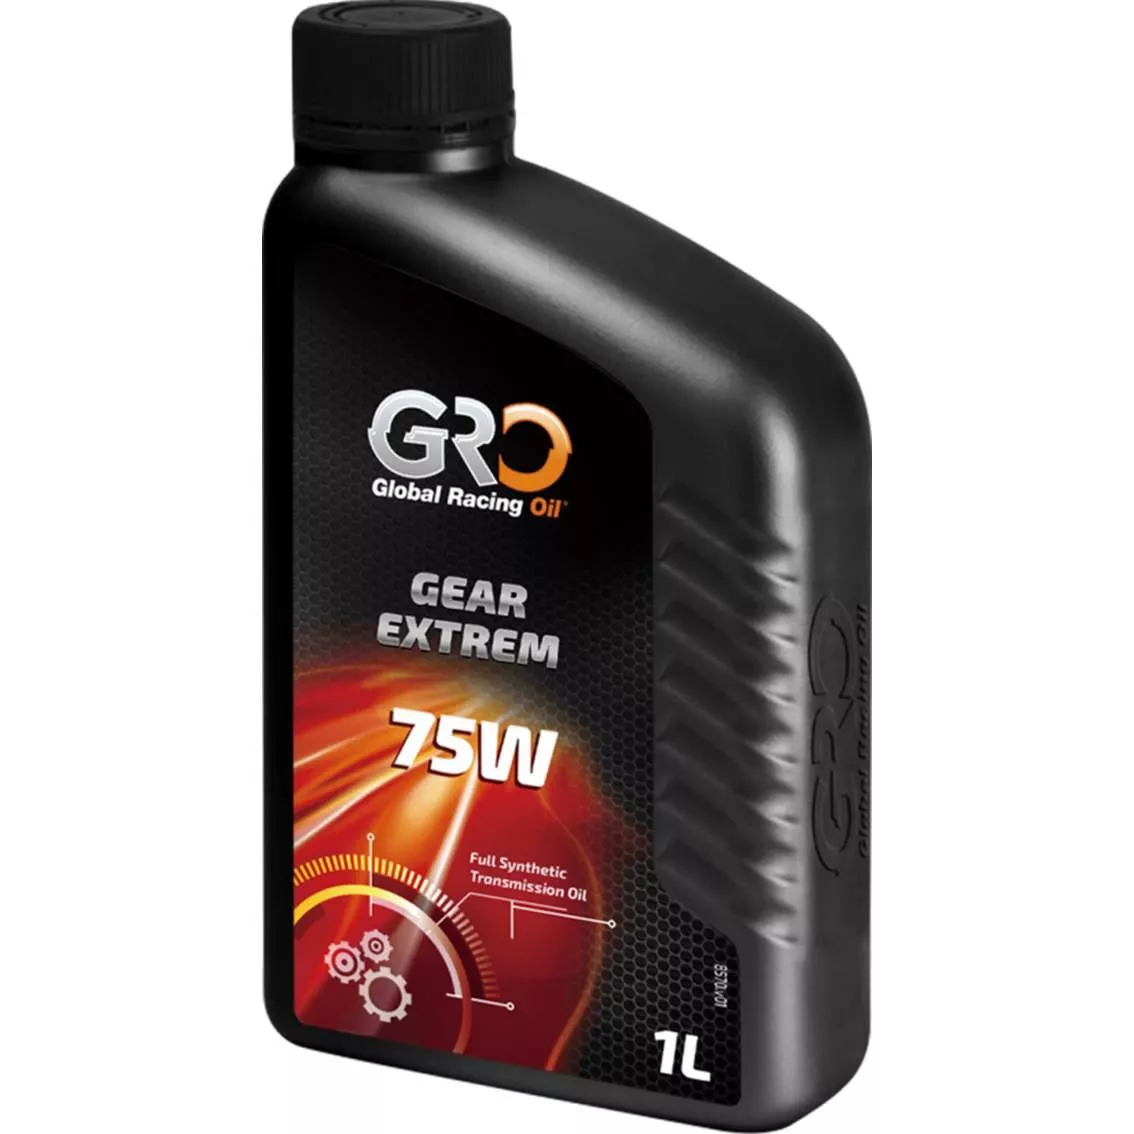 GRO GEAR EXTREM 75W 競技級全合成齒輪油